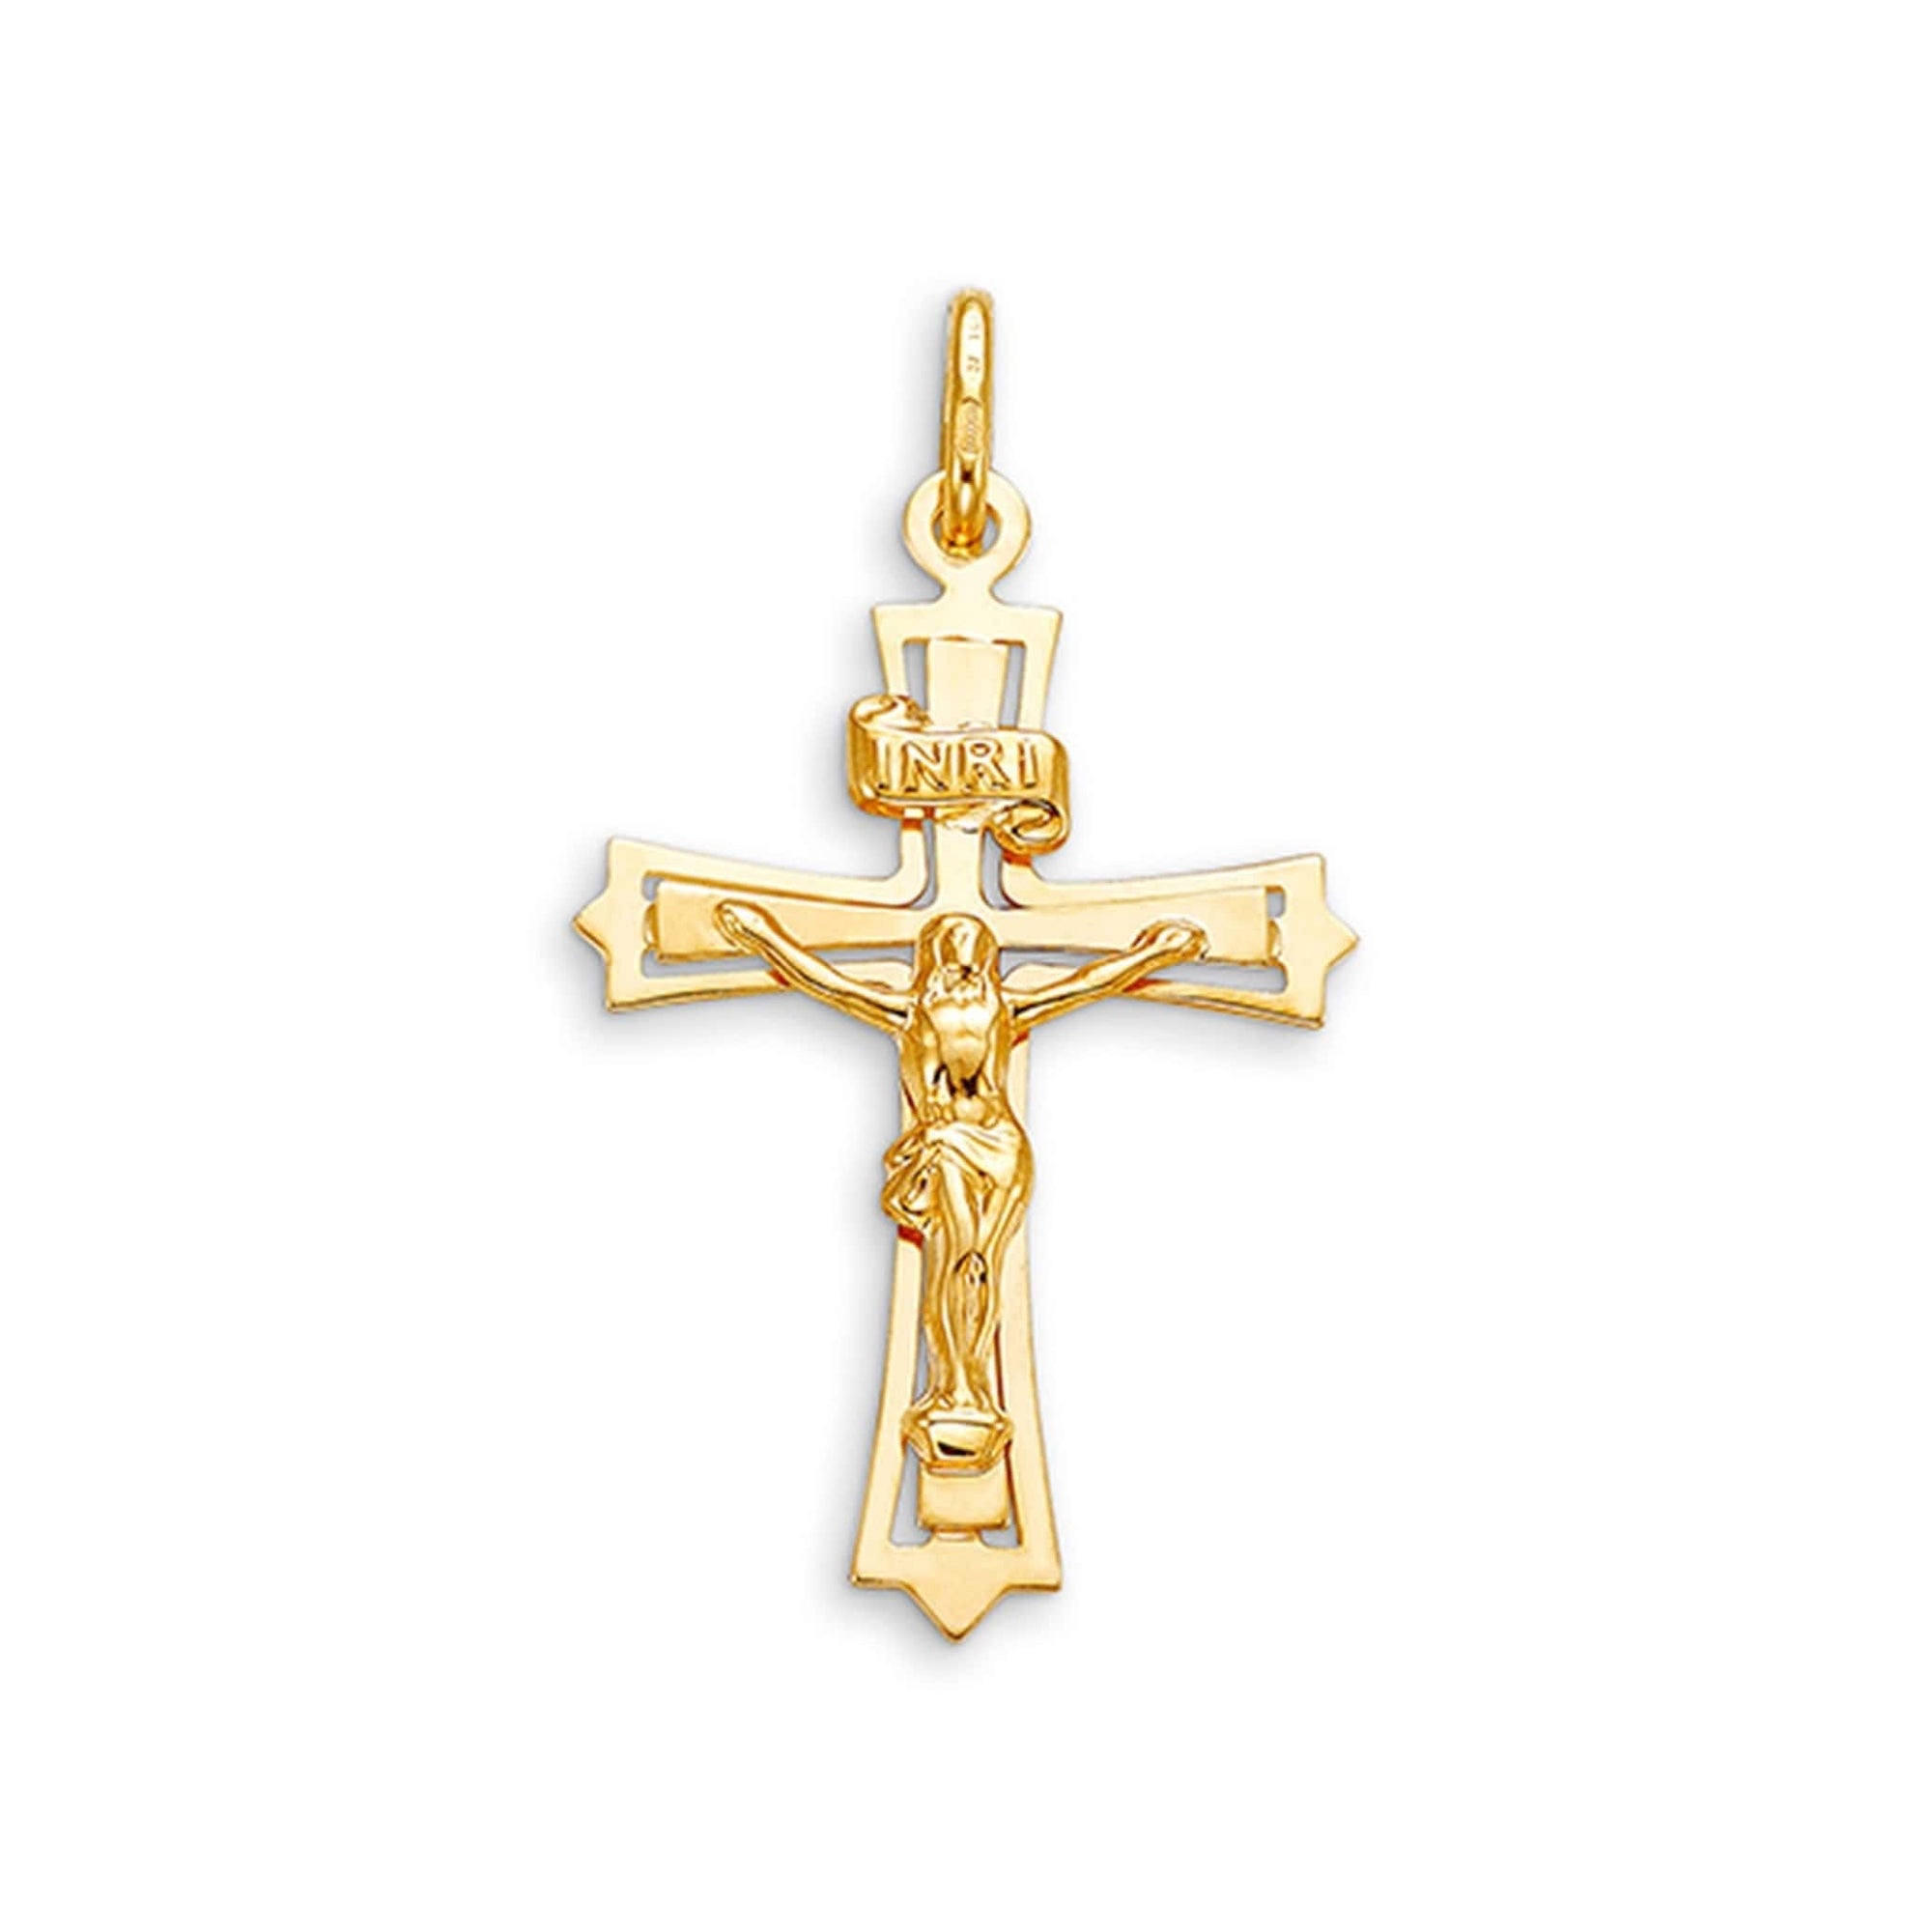 10K Yellow Gold Crucifix Cross Pendant at Arman's Jewellers